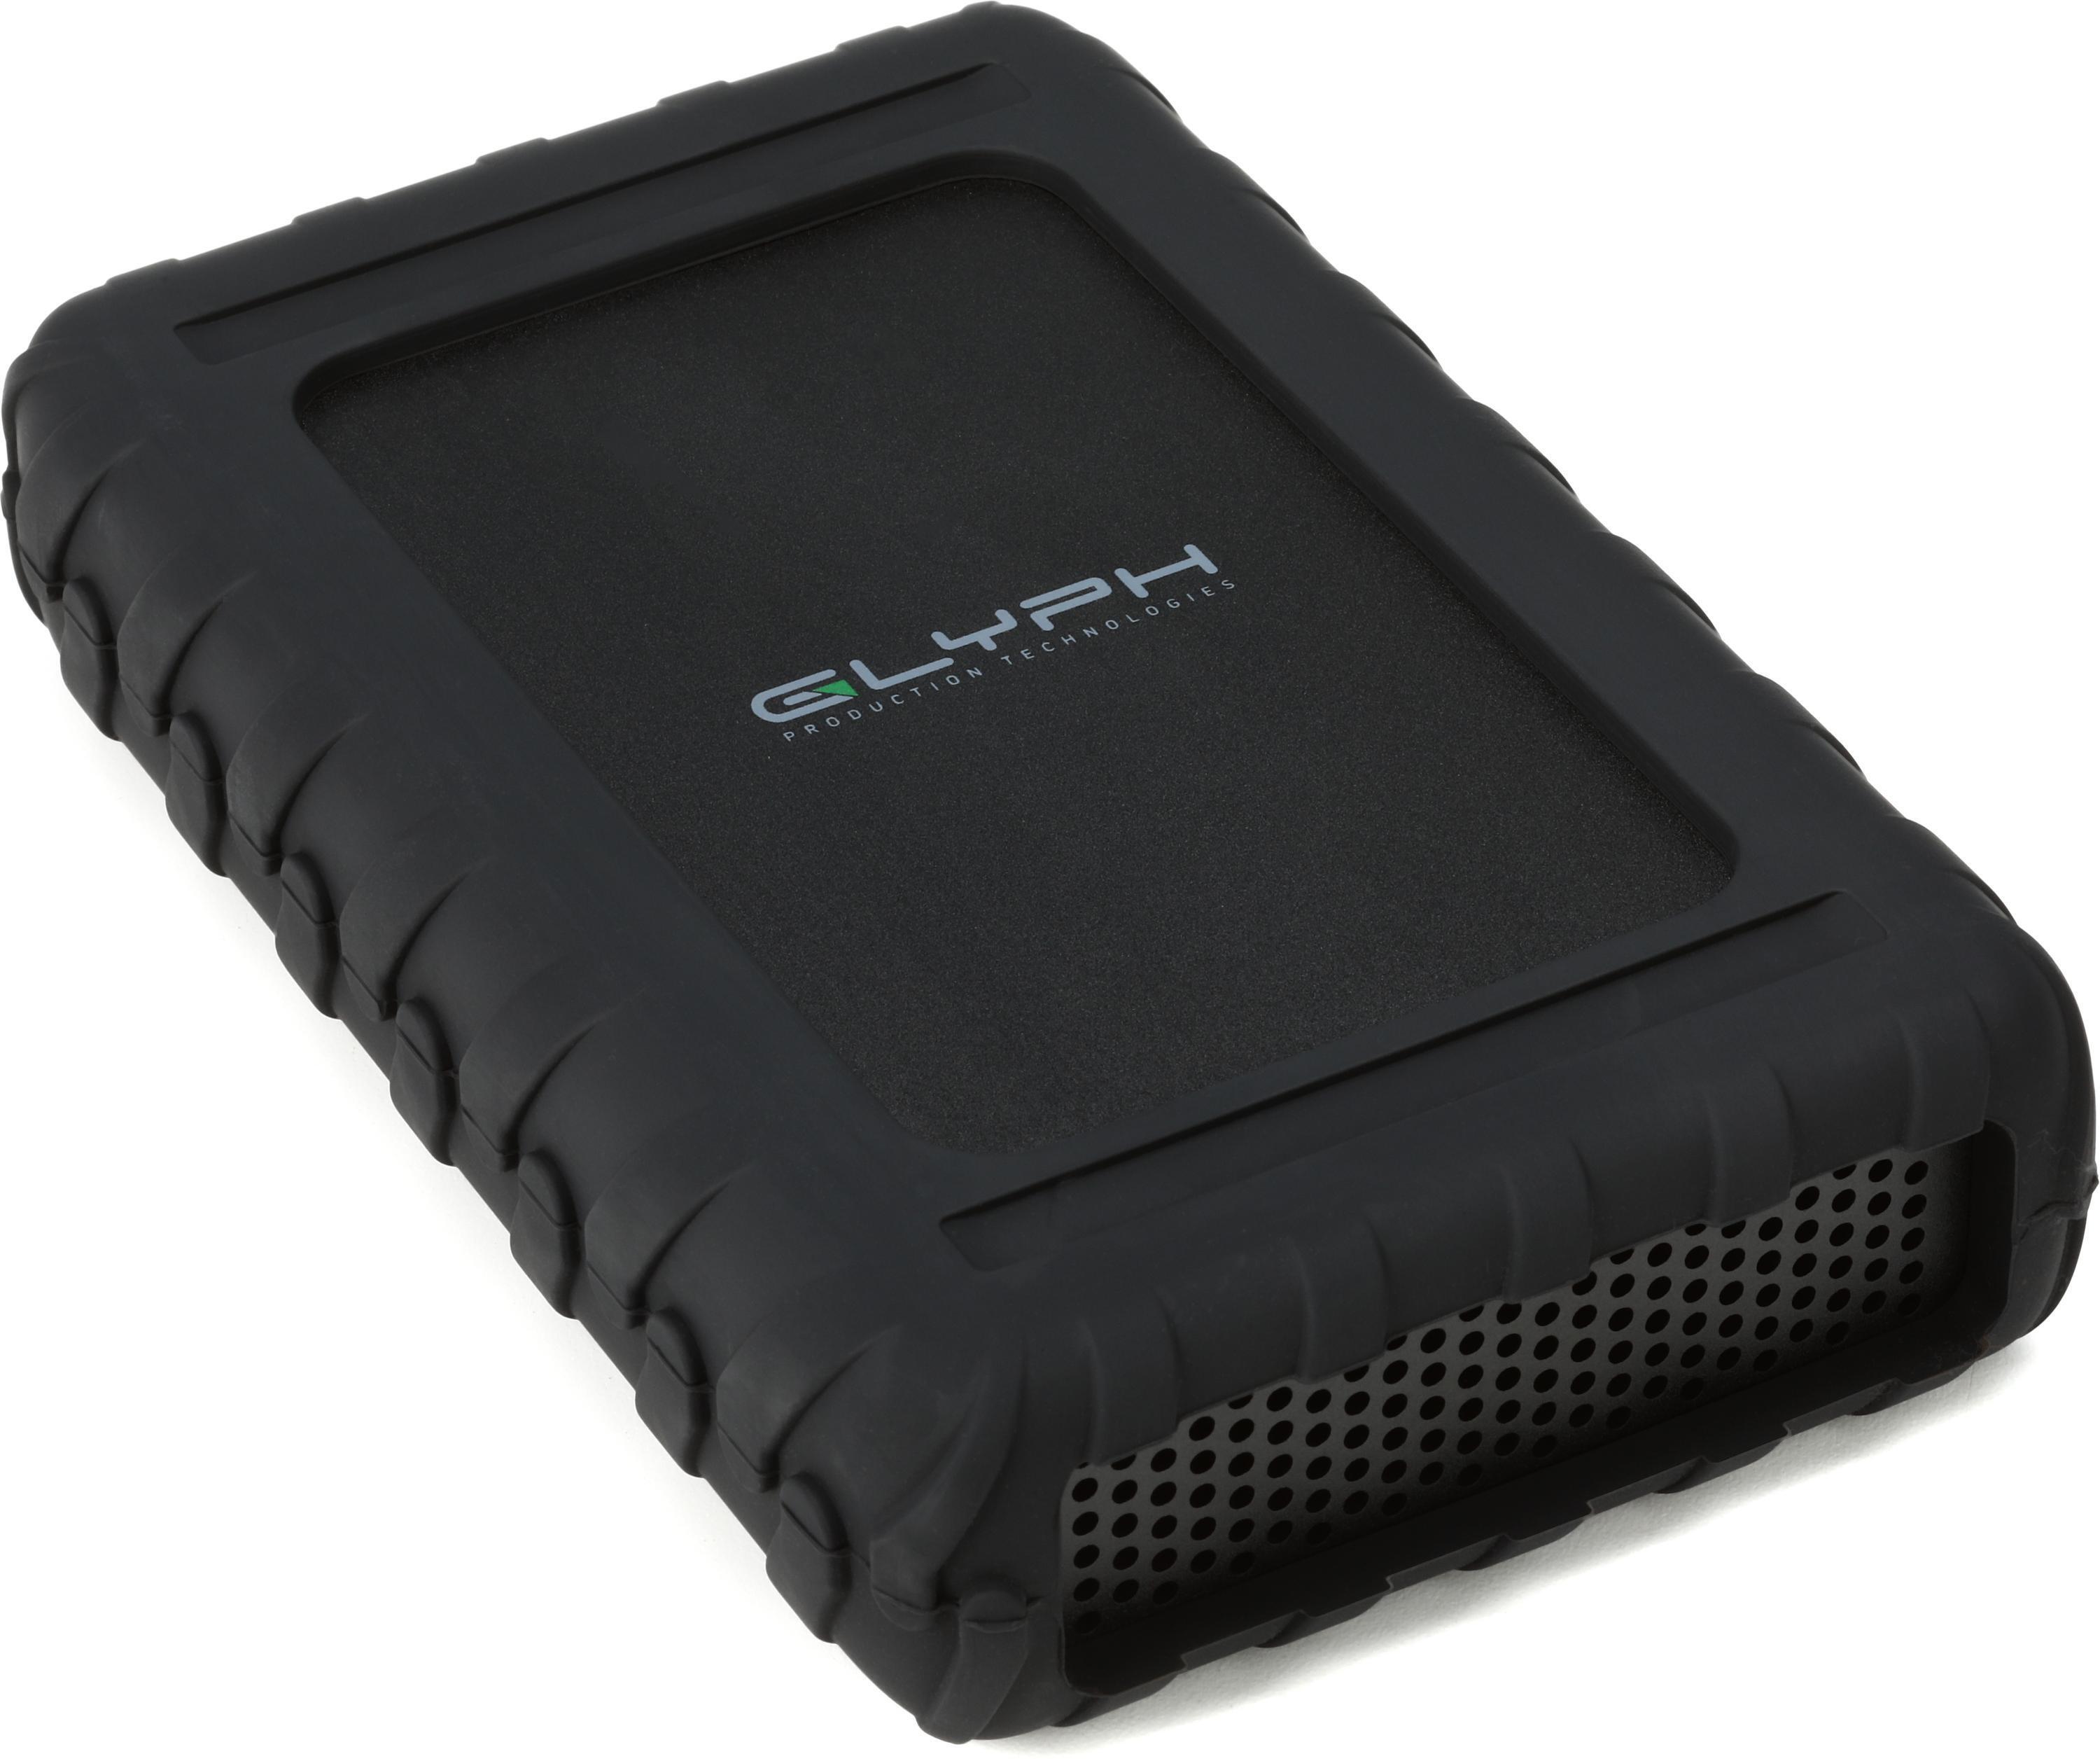 Blackbox Pro 4TB Rugged Desktop Hard Drive - Sweetwater